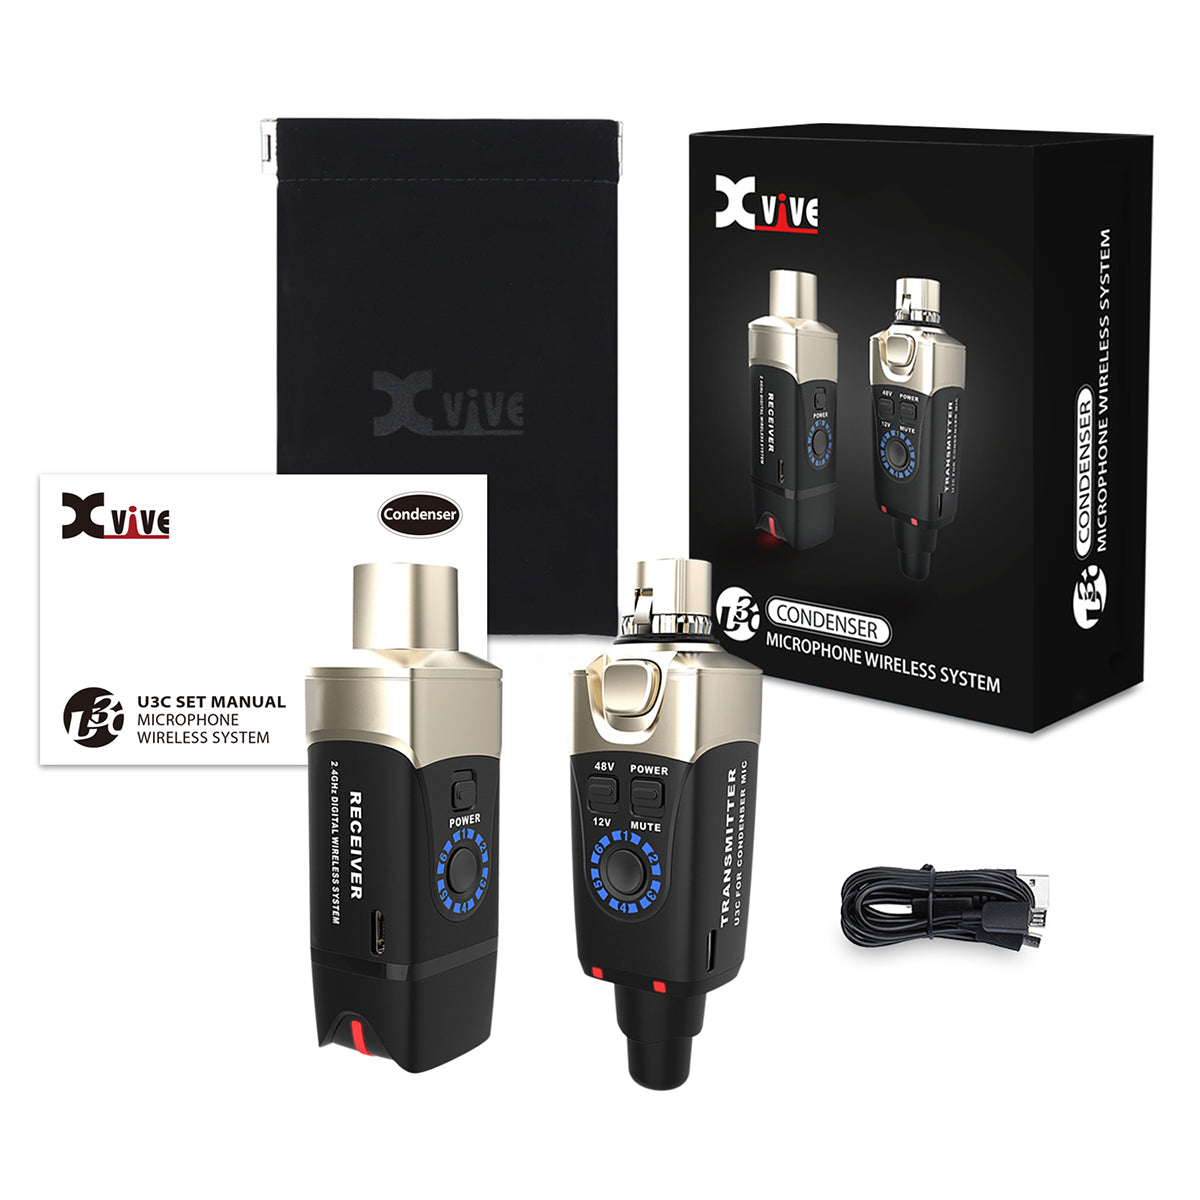 Xvive Condenser Microphone Wireless System